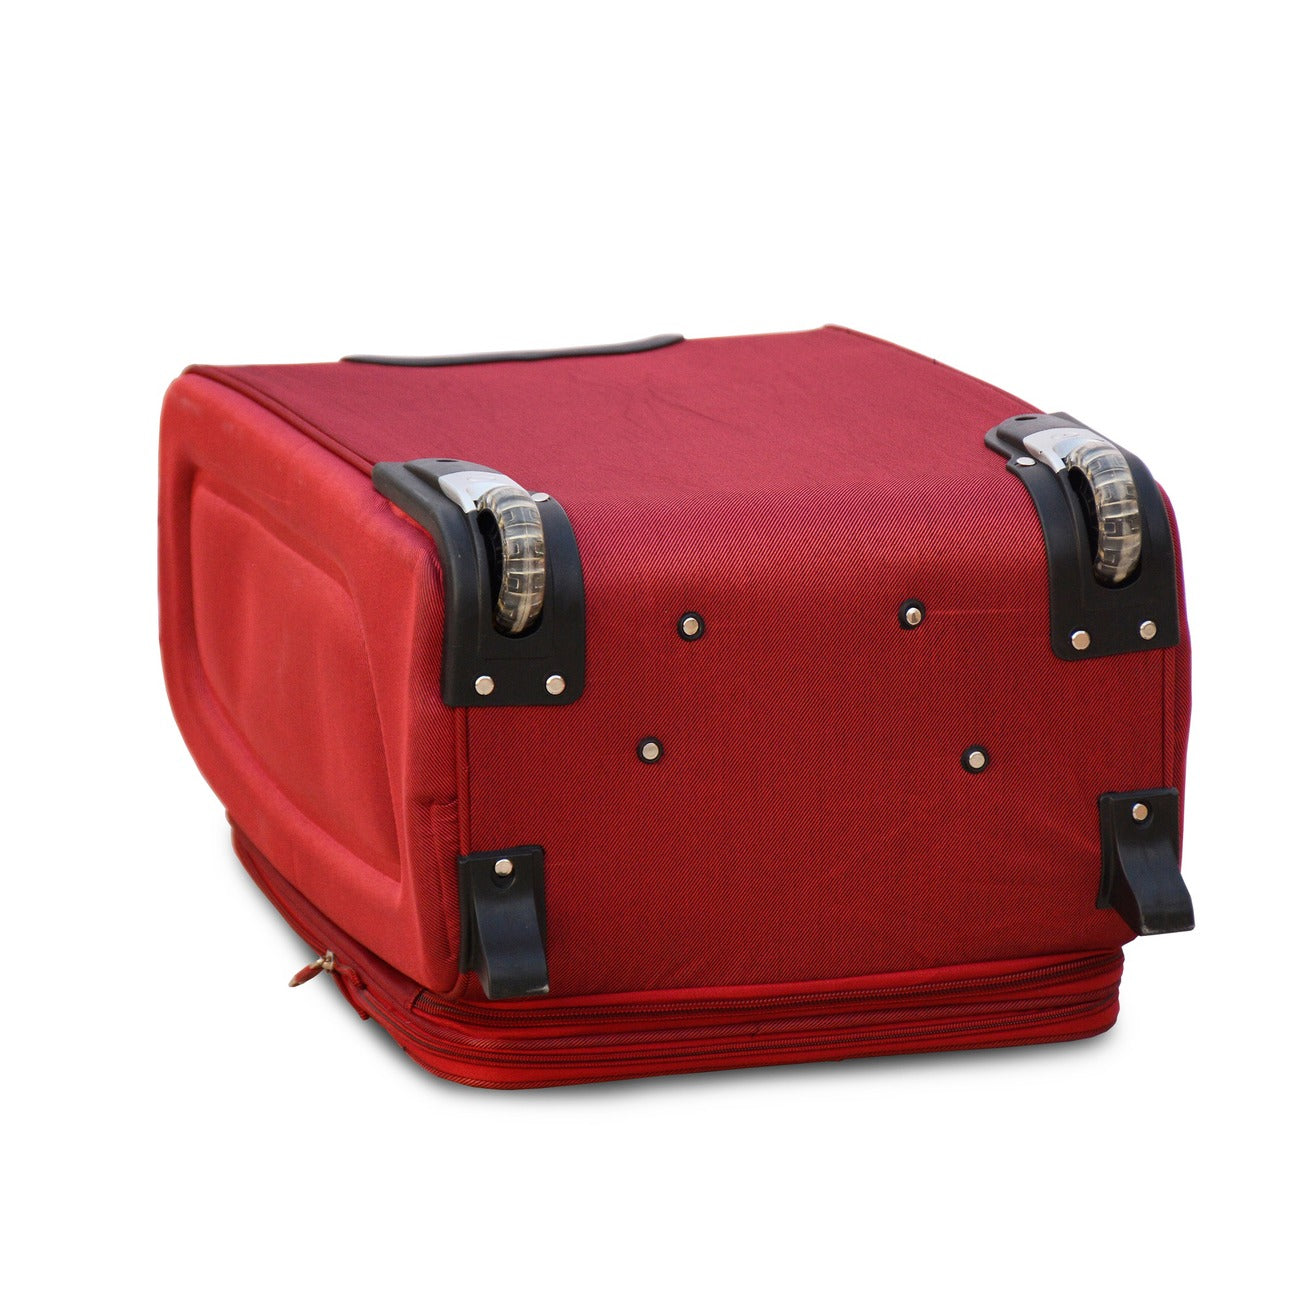 24" Red Colour SJ JIAN 2 Wheel Luggage Lightweight Soft Material Trolley Bag